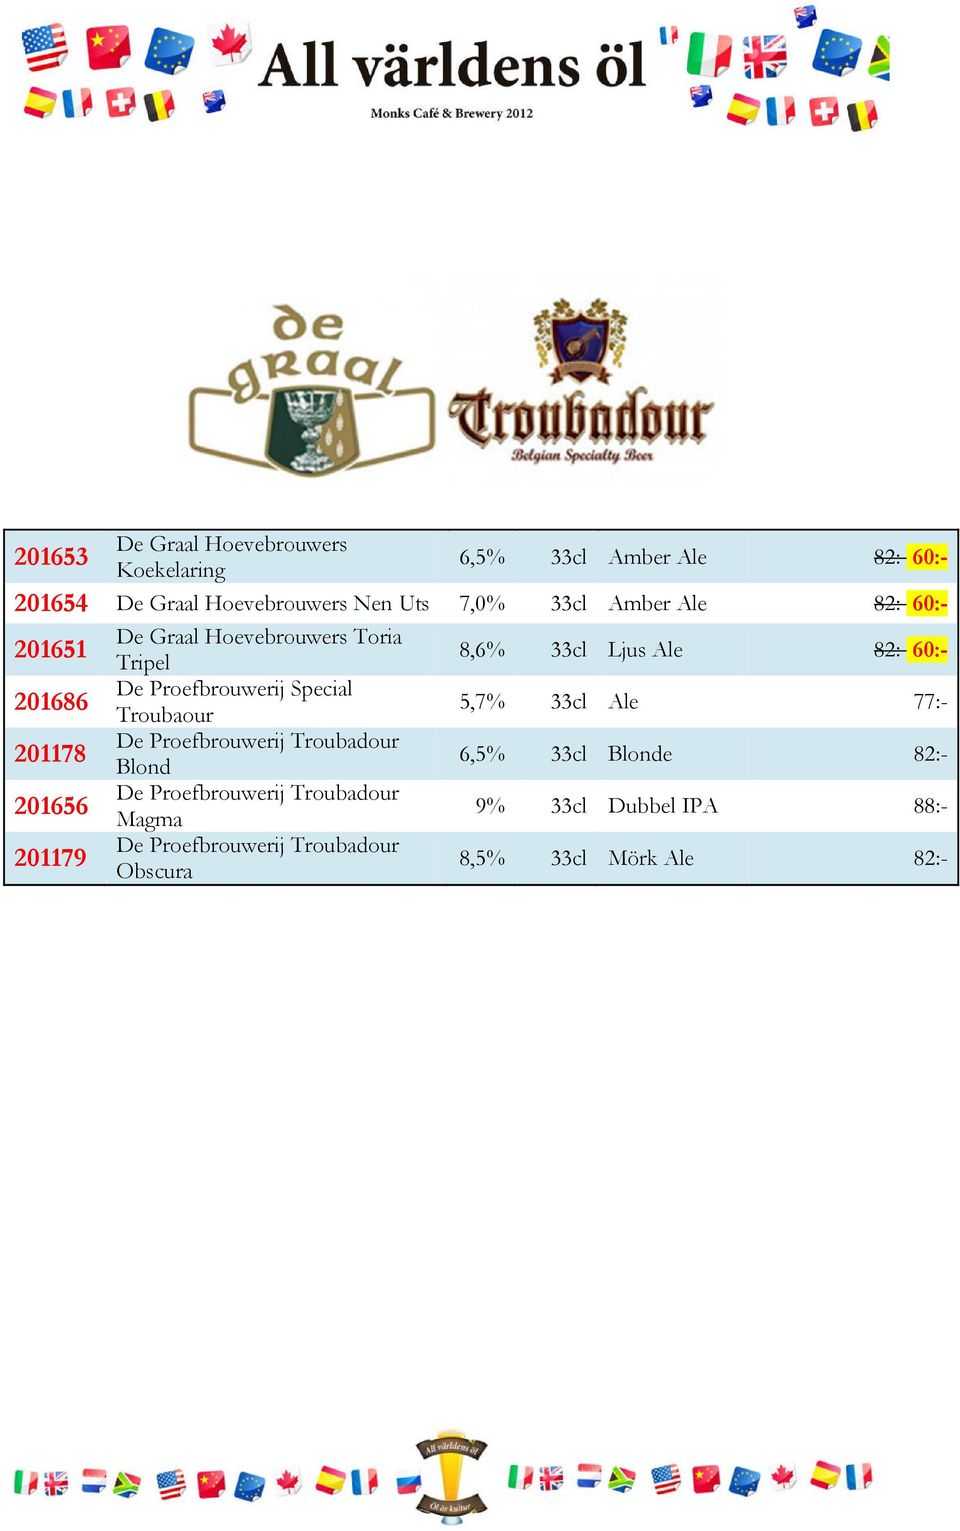 Proefbrouwerij Troubadour 201178 Blond 6,5% De Proefbrouwerij Troubadour 201656 Magma 9% De